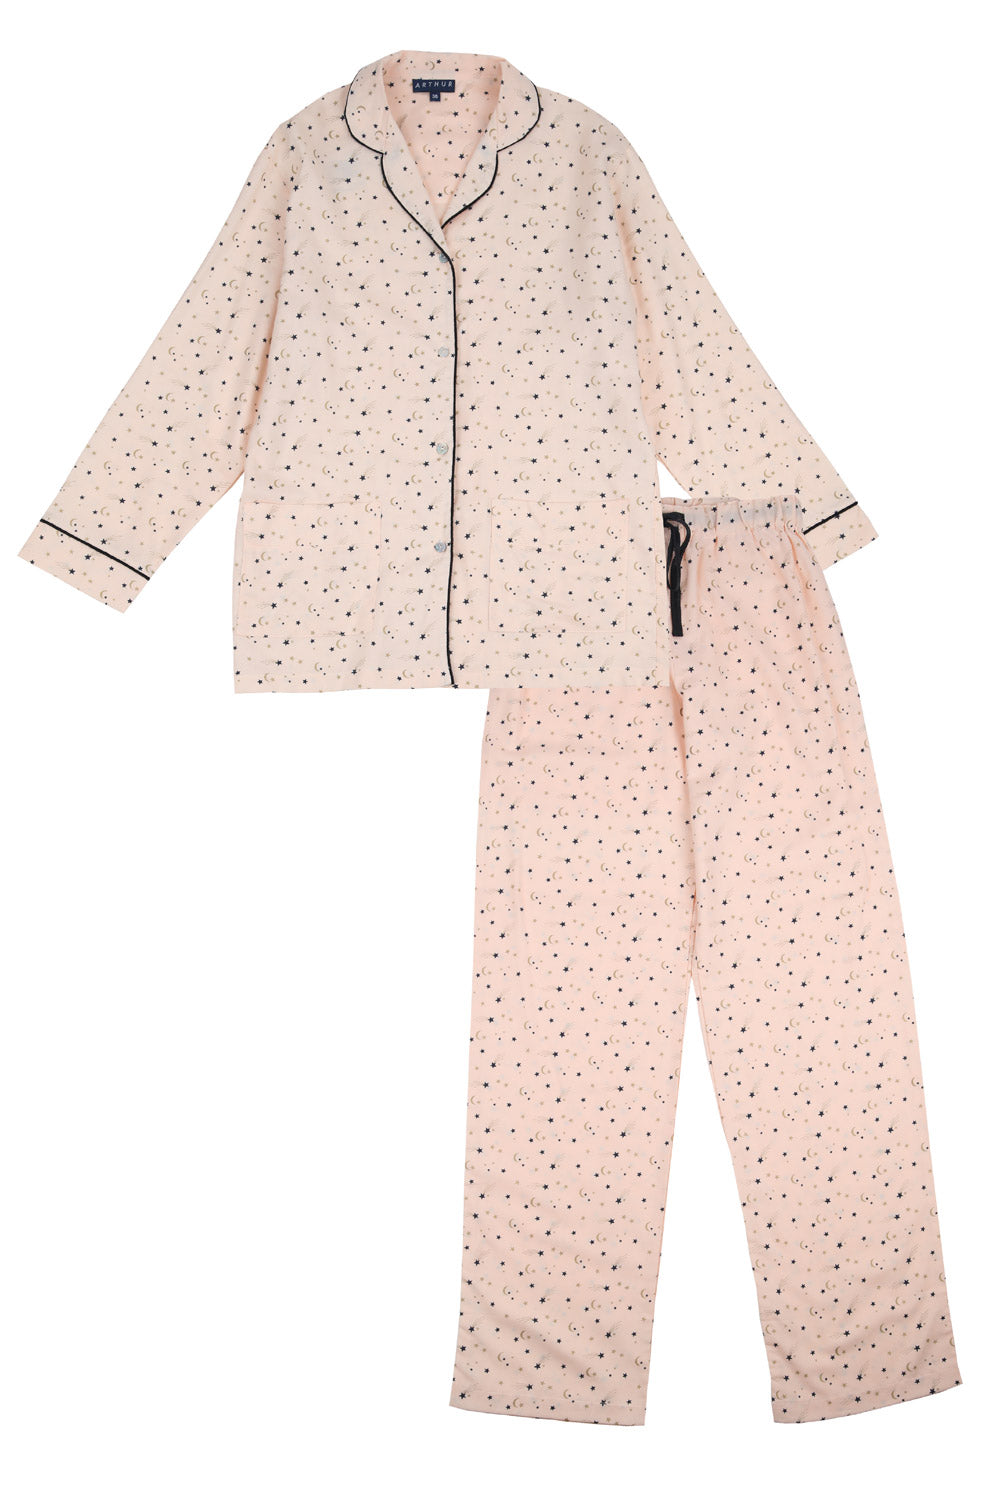 Dreamy Blush Pink Flannel Pajama Set